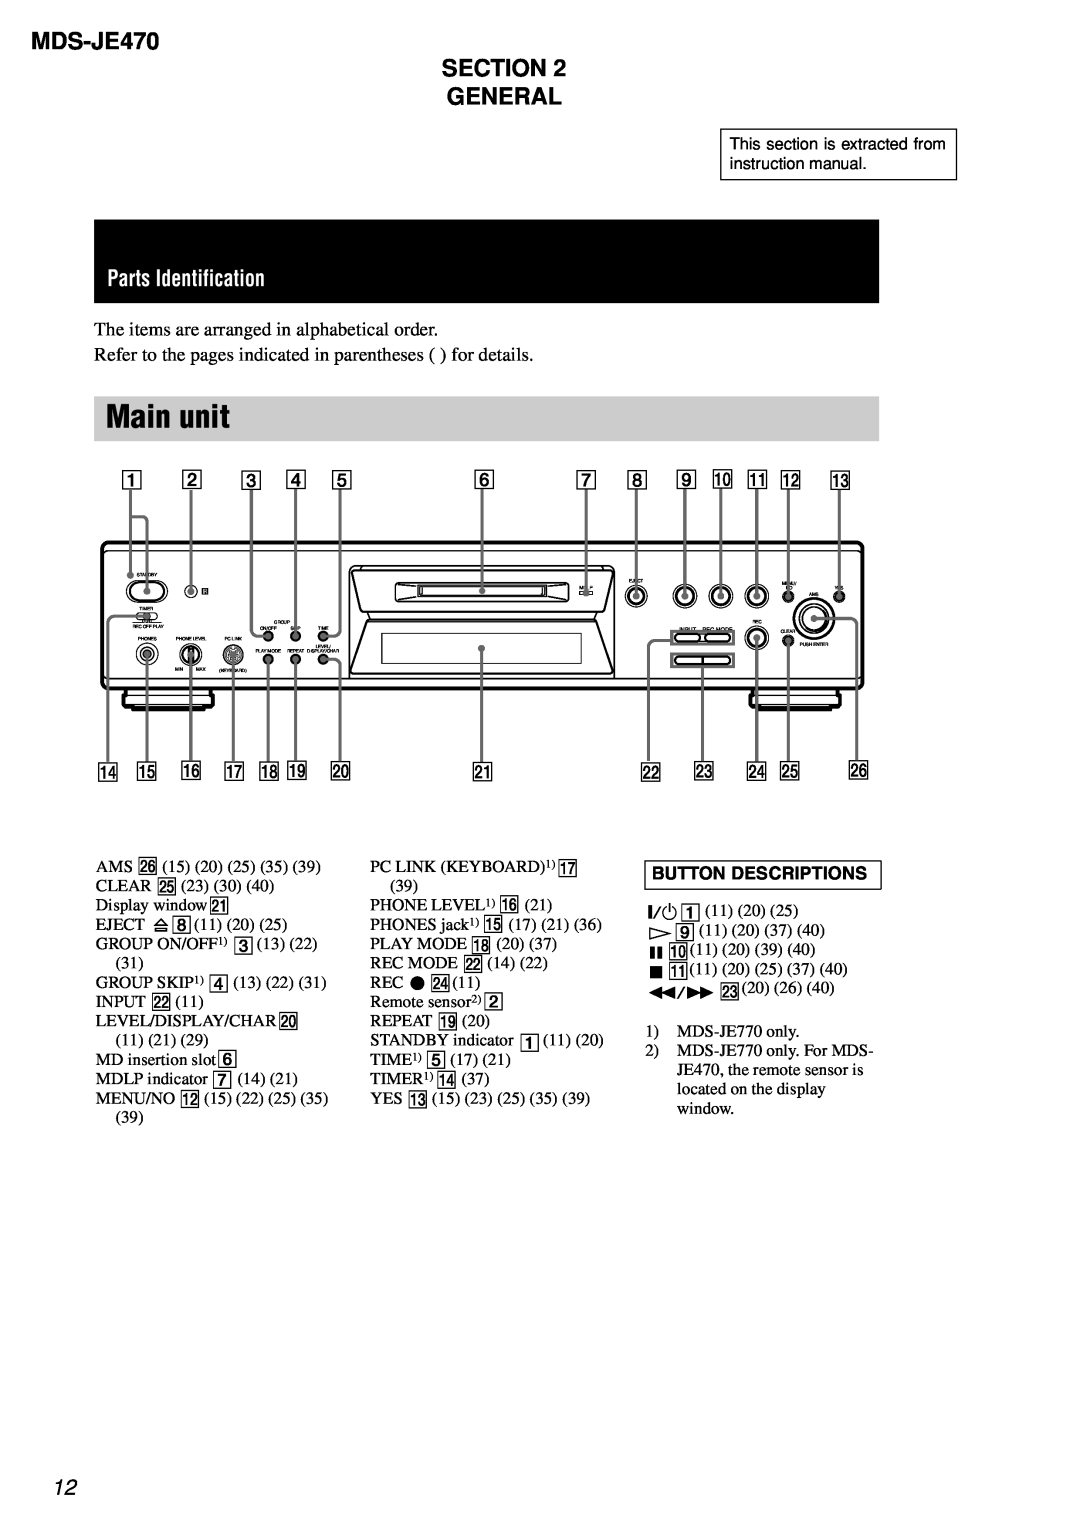 Sony MDS-S50 MDS-JE470 SECTION GENERAL, Button Descriptions, Main unit, Parts Identification, 6 7 8 9 0 qa qs qd 